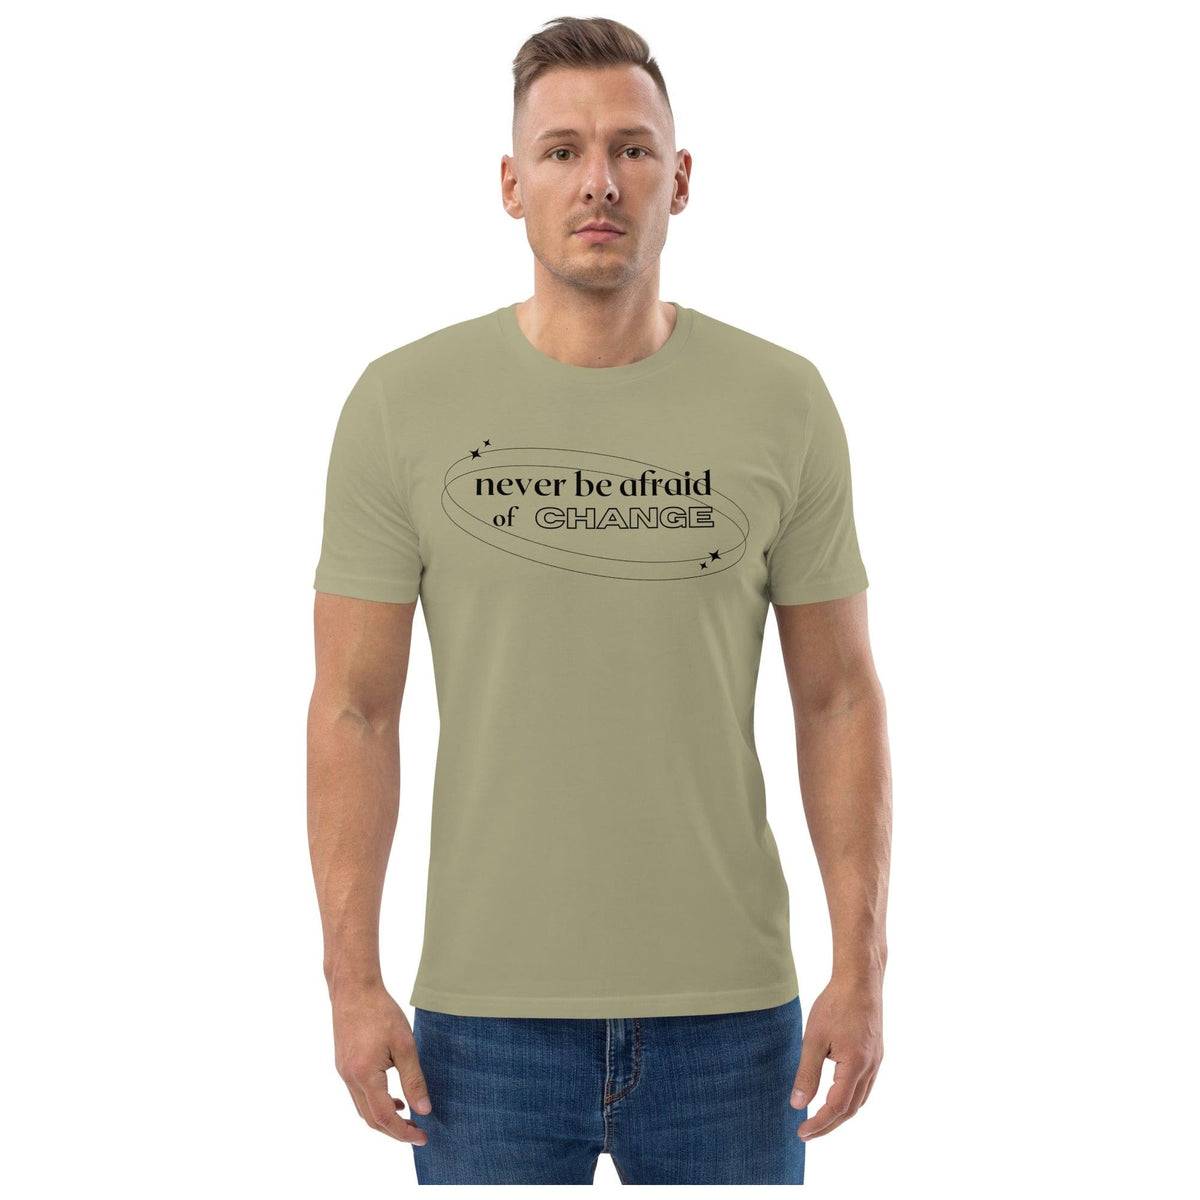 Karma Kiss T Shirt Sage / S Never Be Afraid of Change - Unisex Organic Cotton T-Shirt